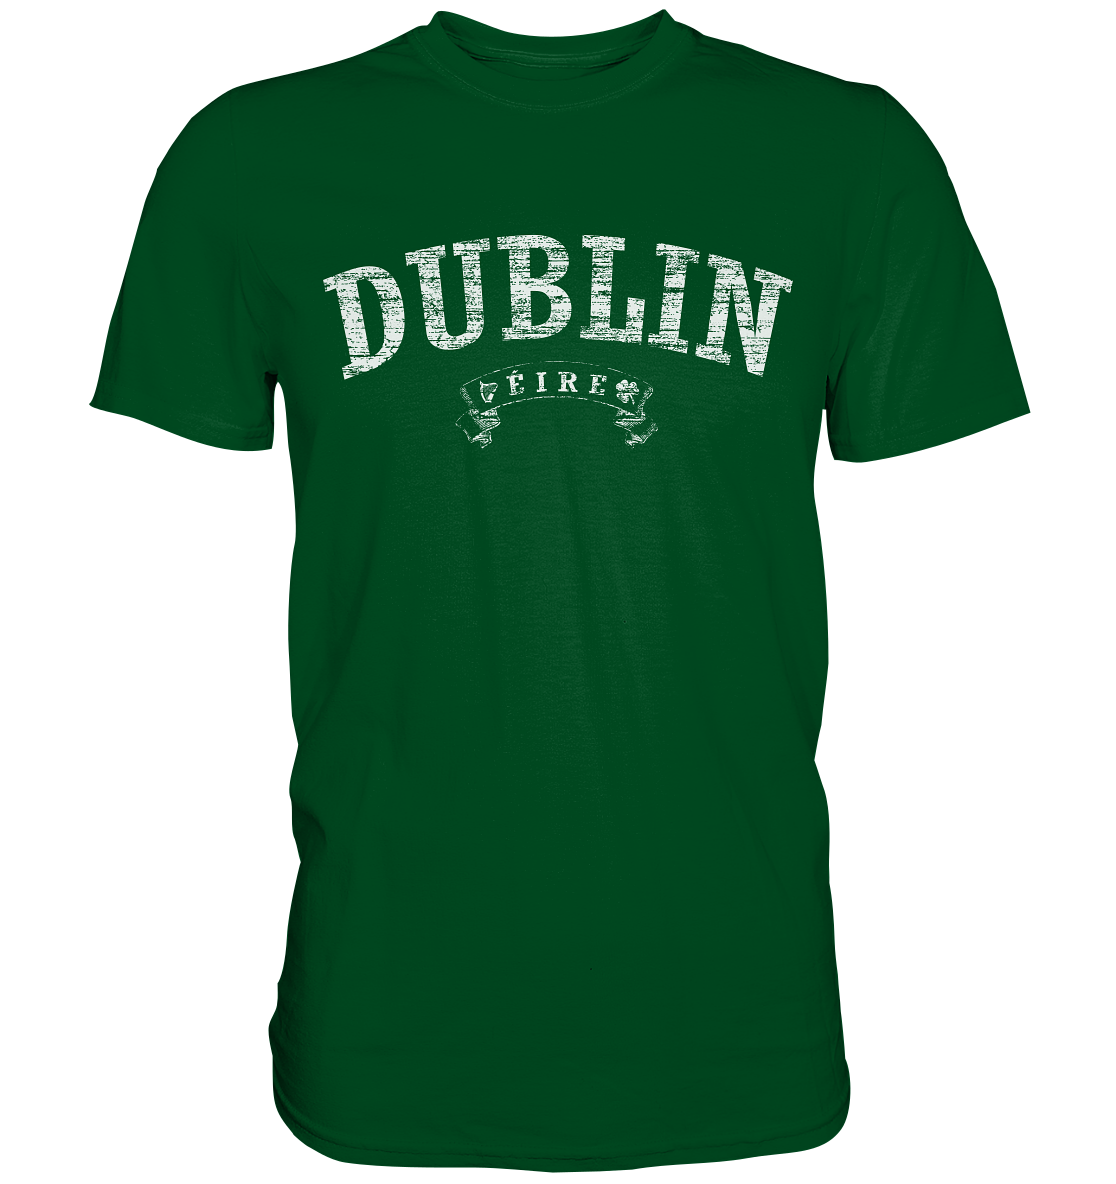 "Dublin - Éire" - Premium Shirt